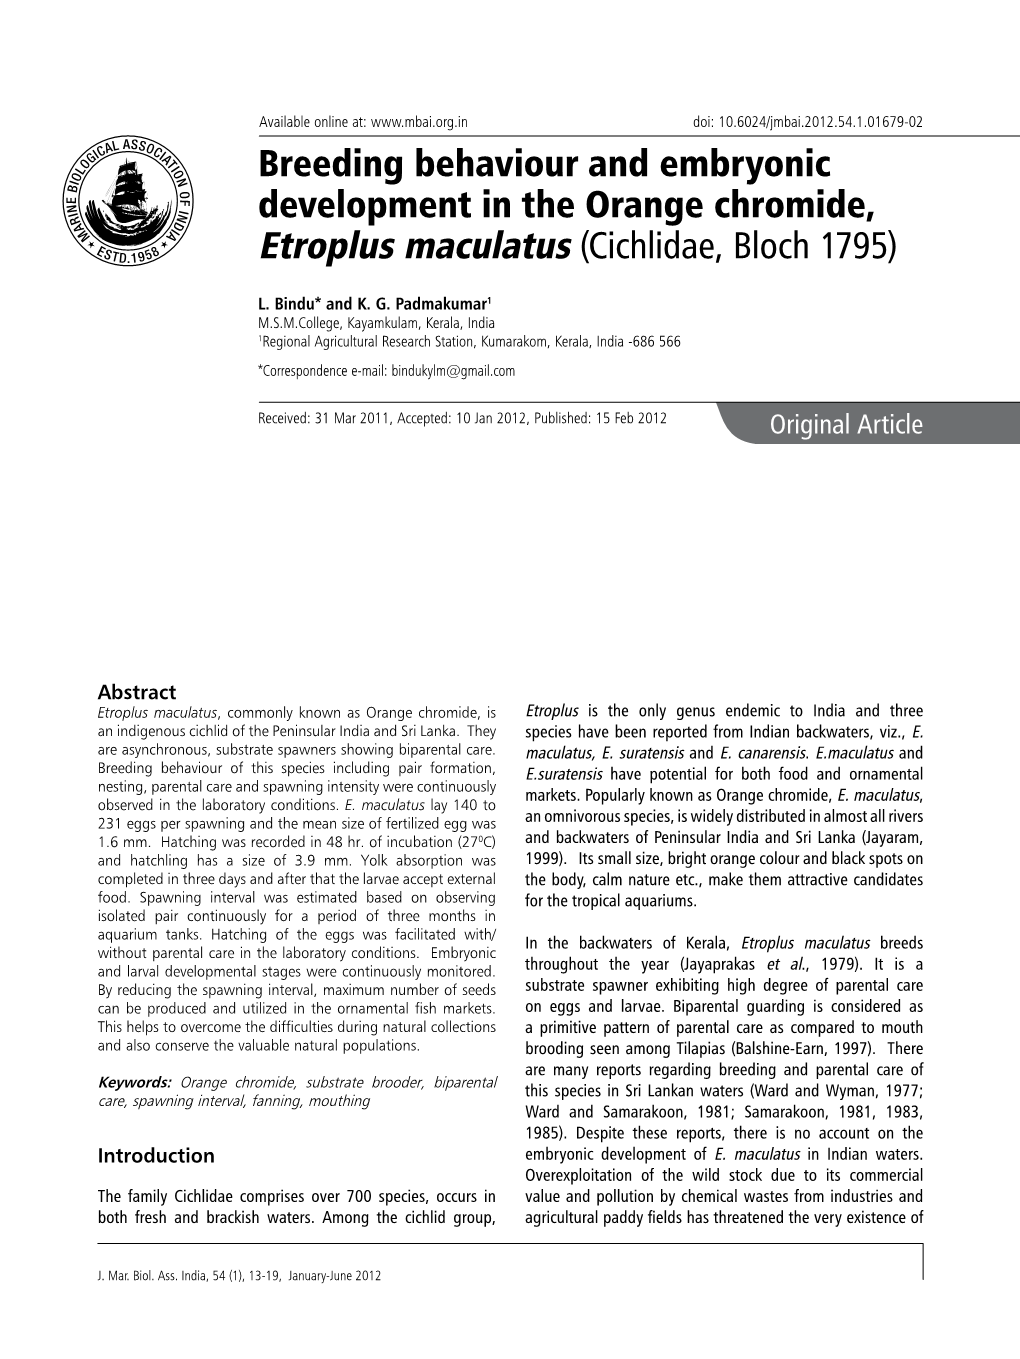 Breeding Behaviour and Embryonic Development in the Orange Chromide, Etroplus Maculatus (Cichlidae, Bloch 1795)